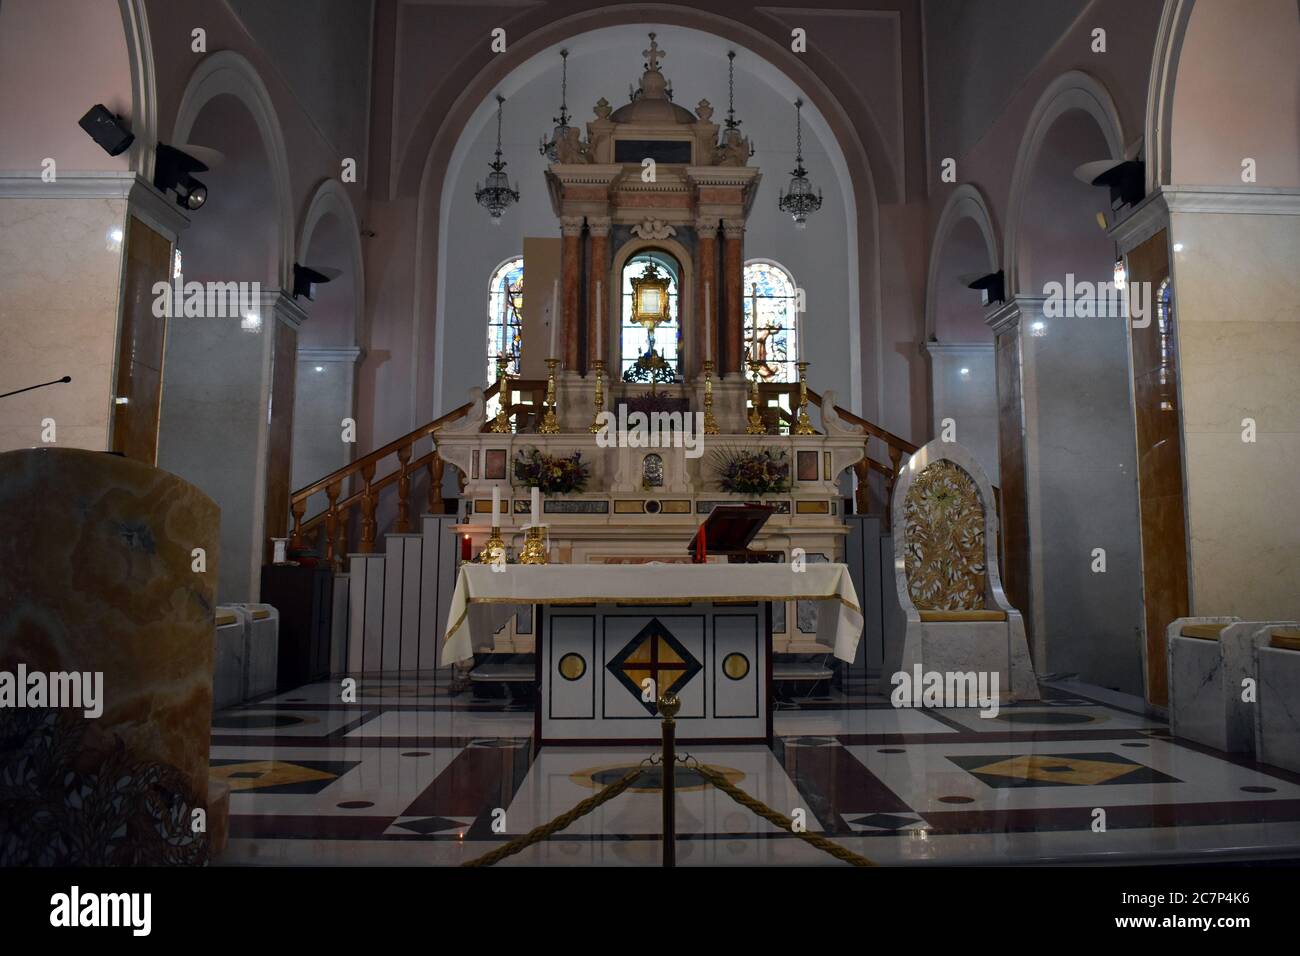 The interior of the Volto Santo di Manoppello church, housing the Holy Face image. Stock Photo